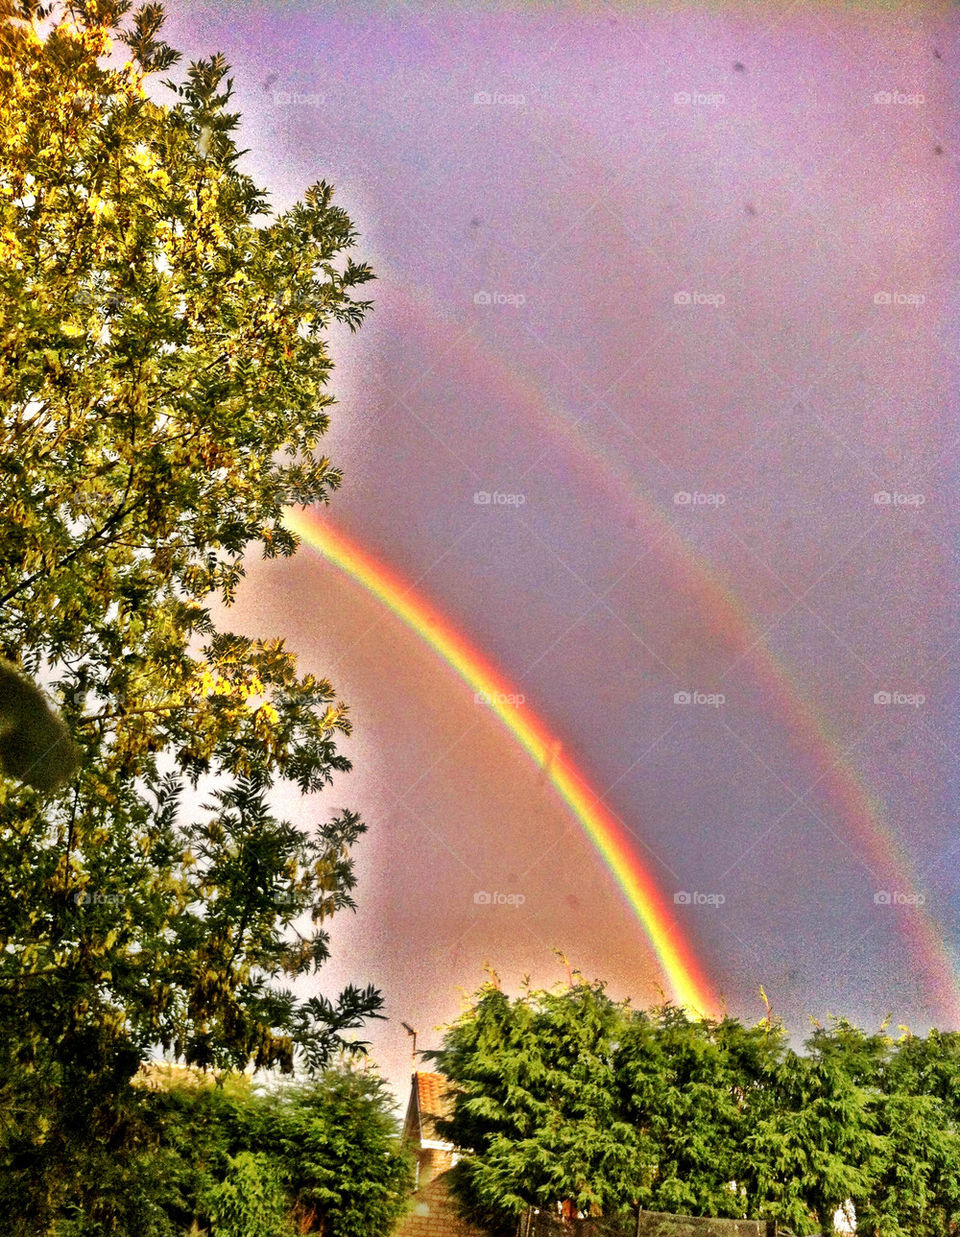 Double rainbow from my garden